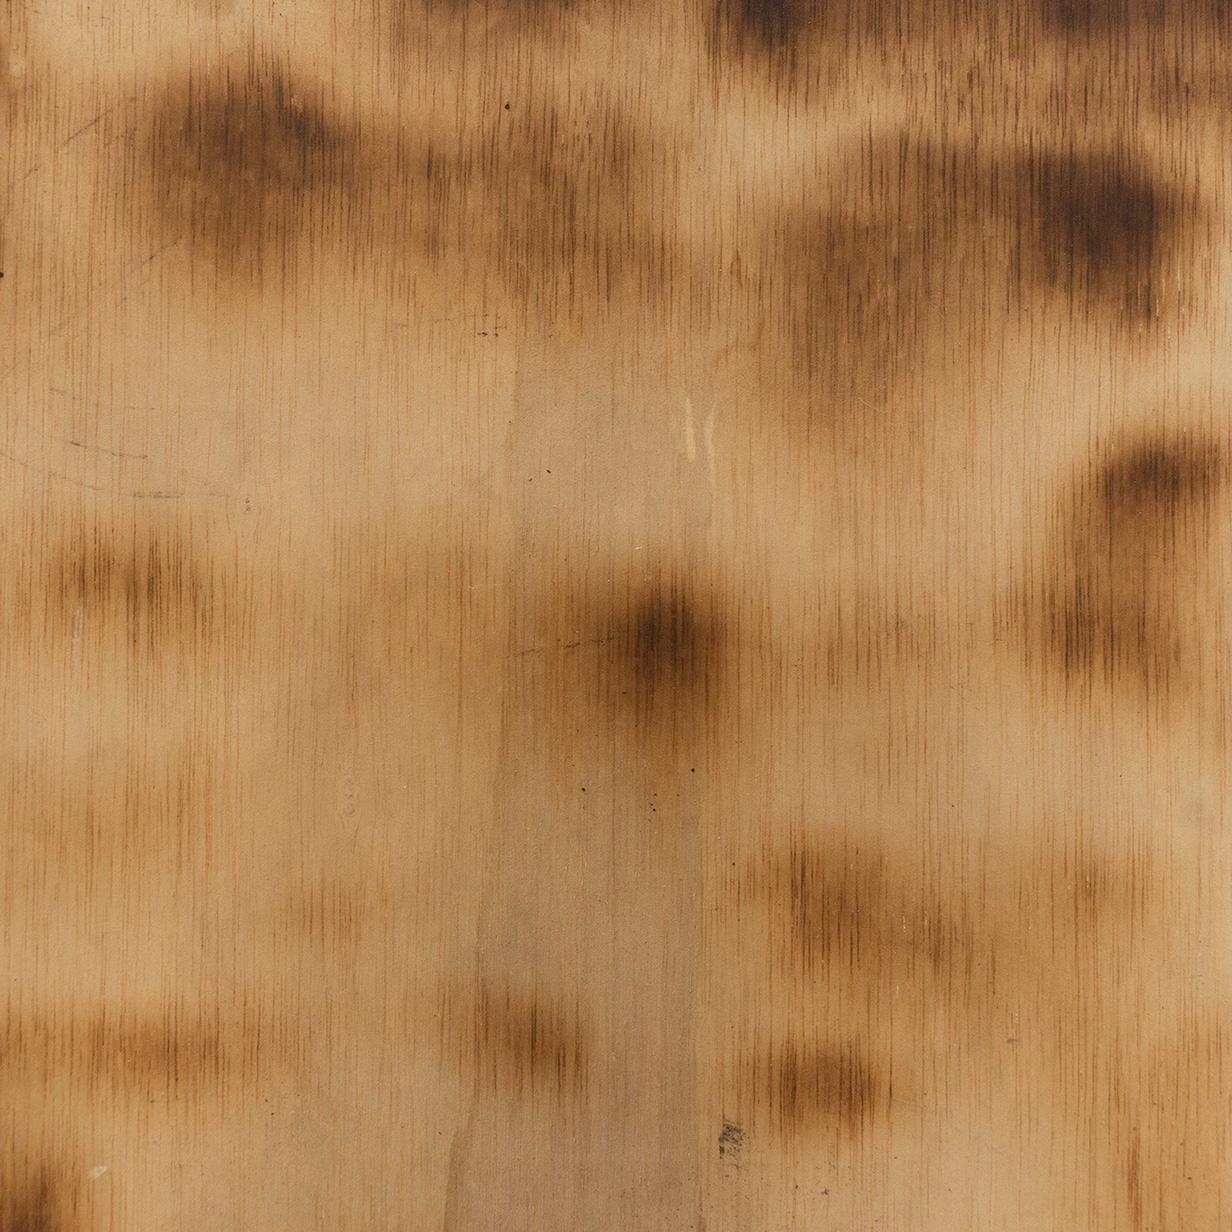 Ramon dels Horts Contemporary Artwork Burned Wood, circa 2018 For Sale 6